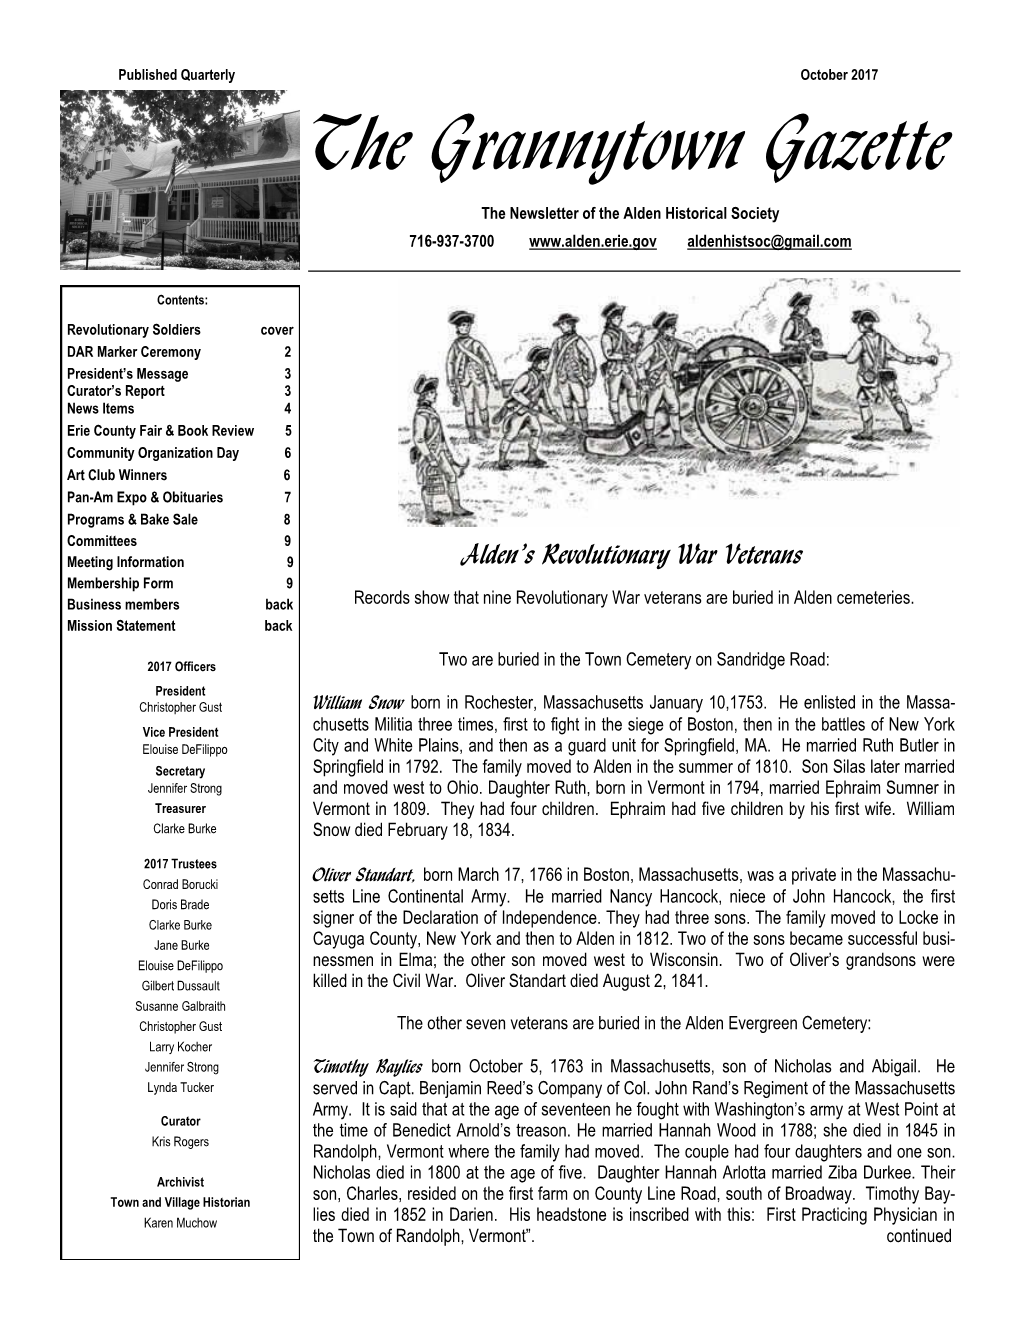 The Grannytown Gazette